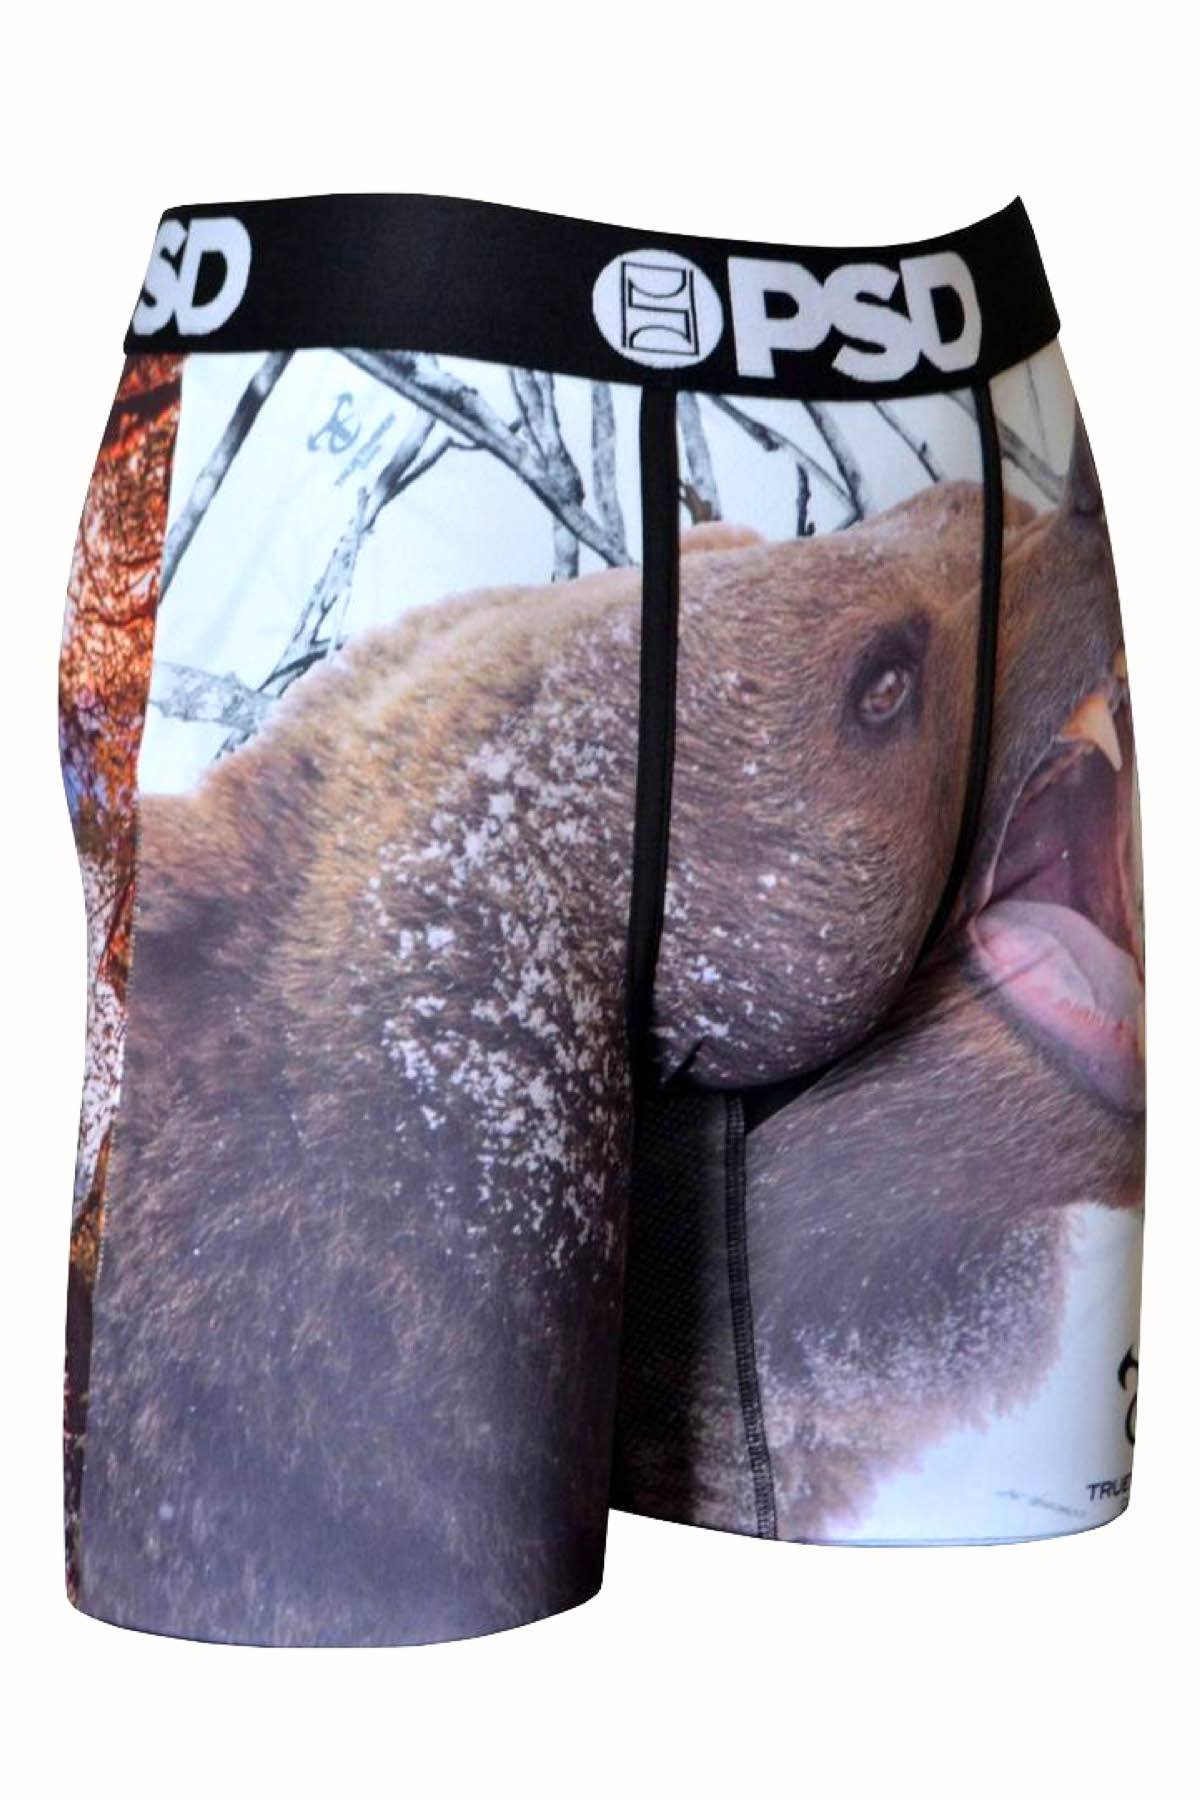 Psd Bear True Timber Boxer Brief, Underwear